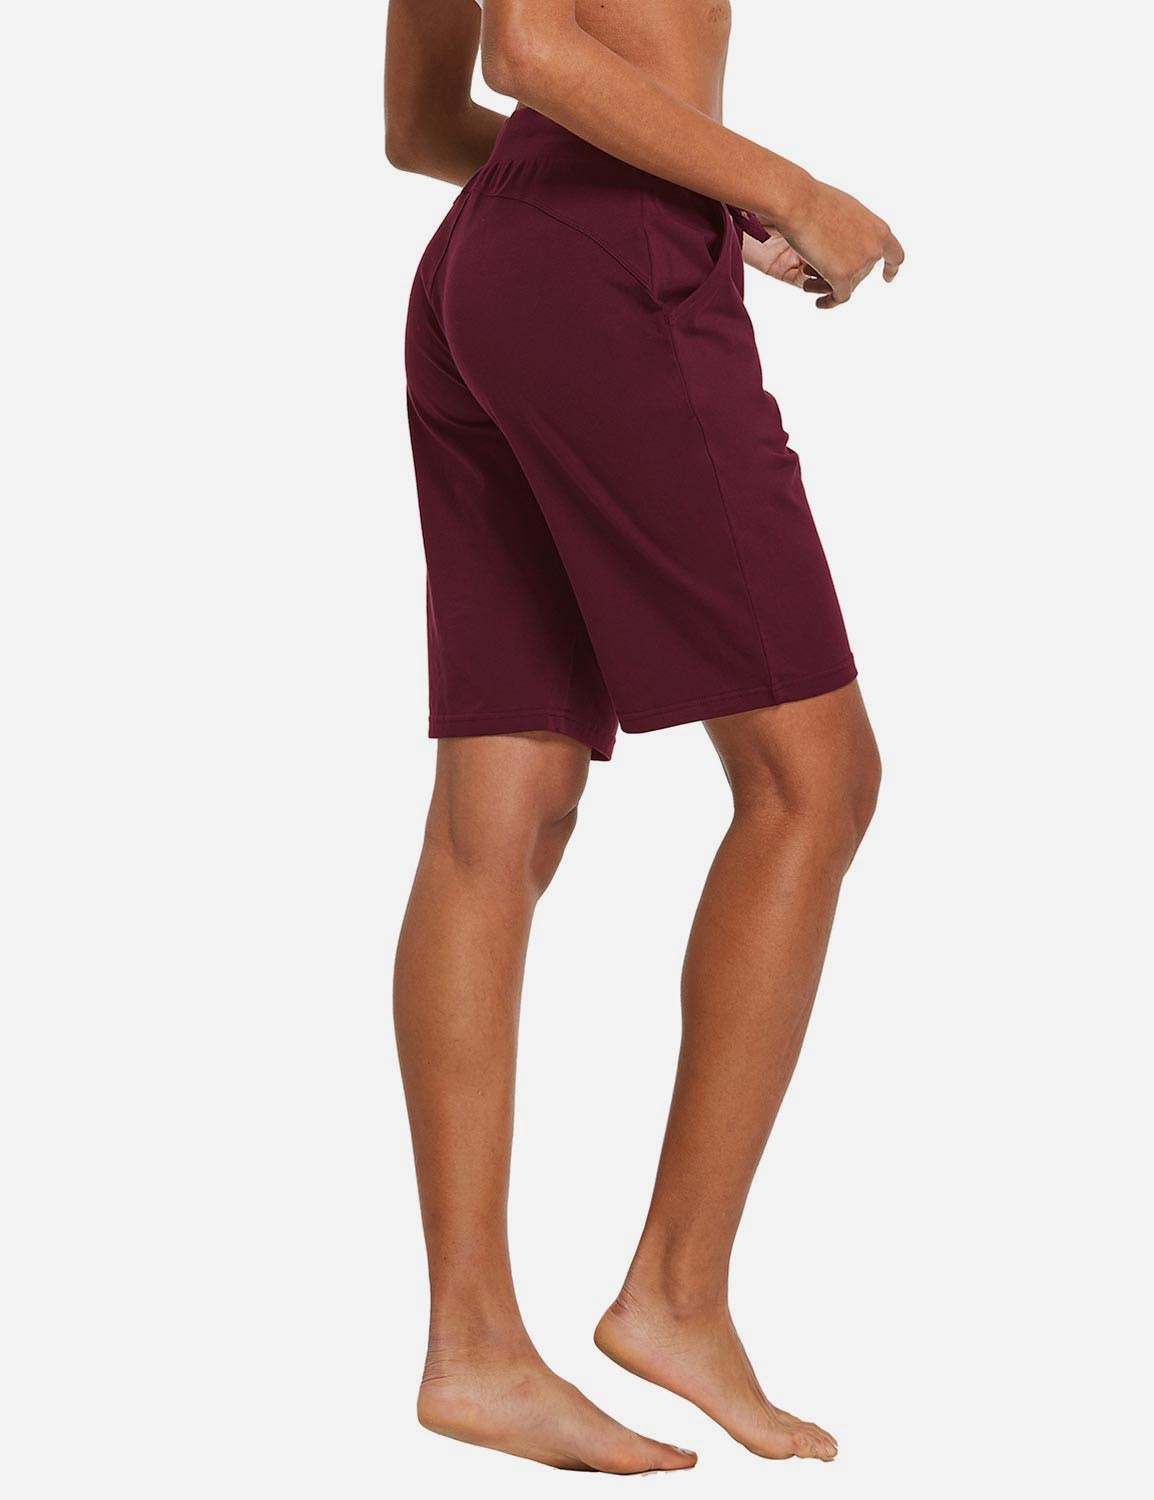 Baleaf Women's Cotton Straight Leg Pocketed Weekend Bermuda Shorts abh179 Wine Red Back